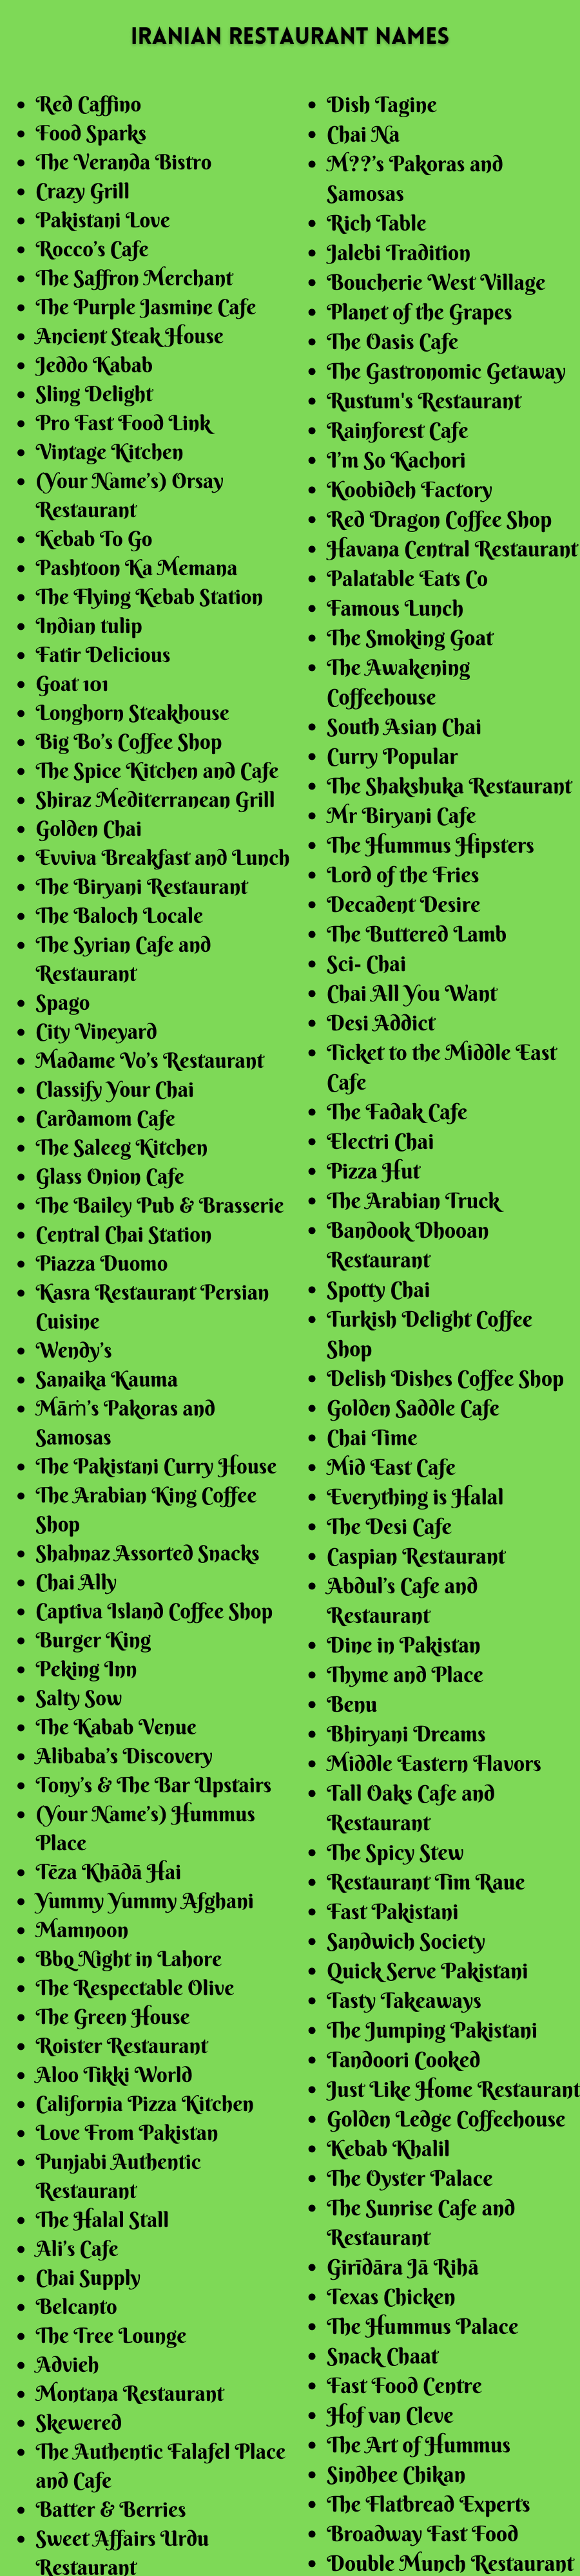 Iranian Restaurant Names